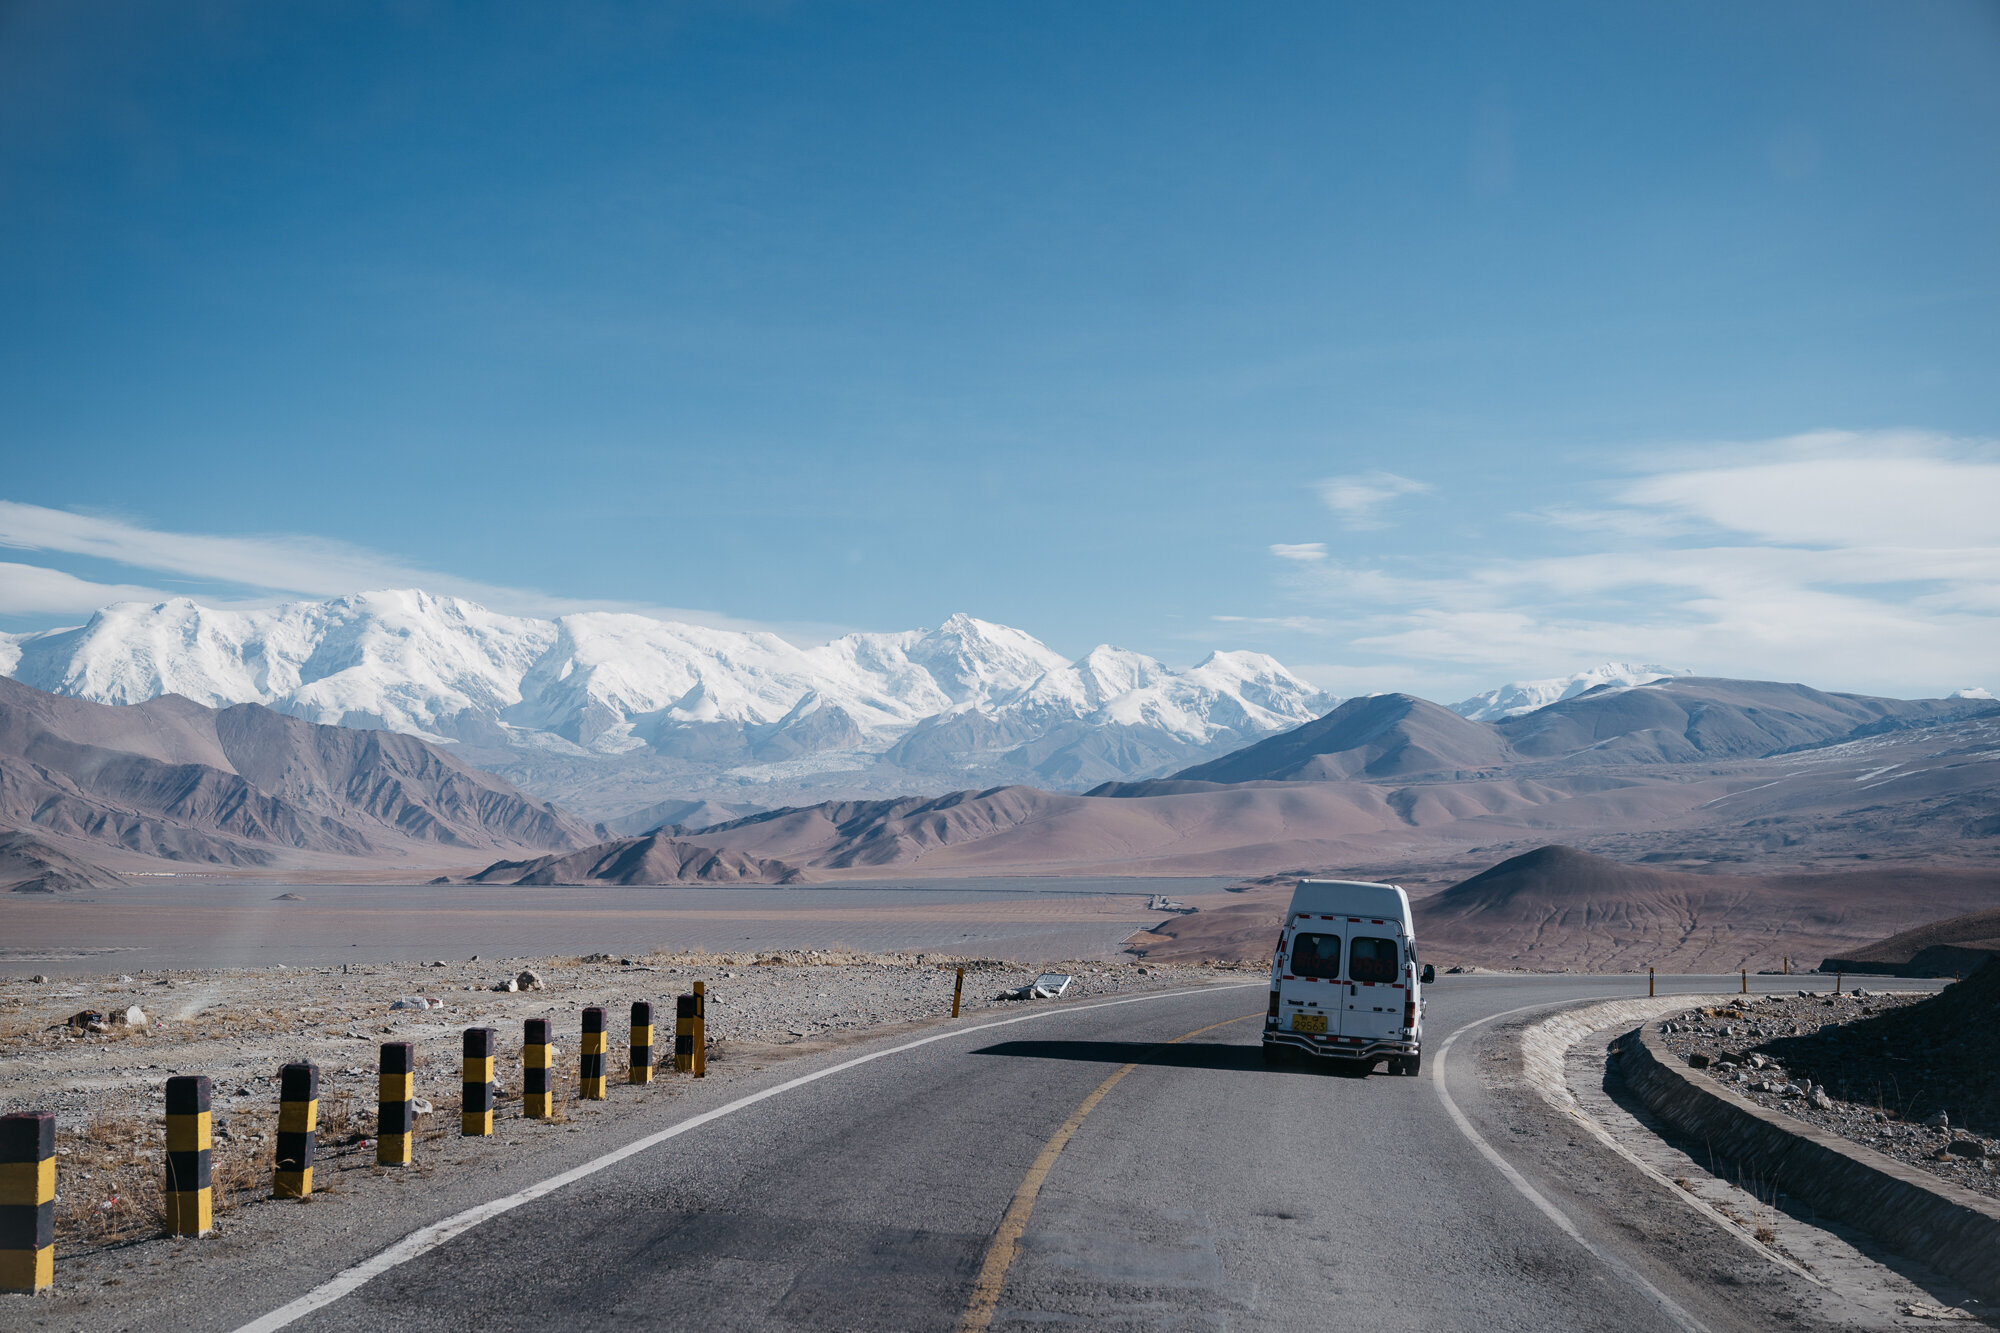  The road from Tashkurgan to Kashgar. These mountains are part of the Pamir mountain range. 